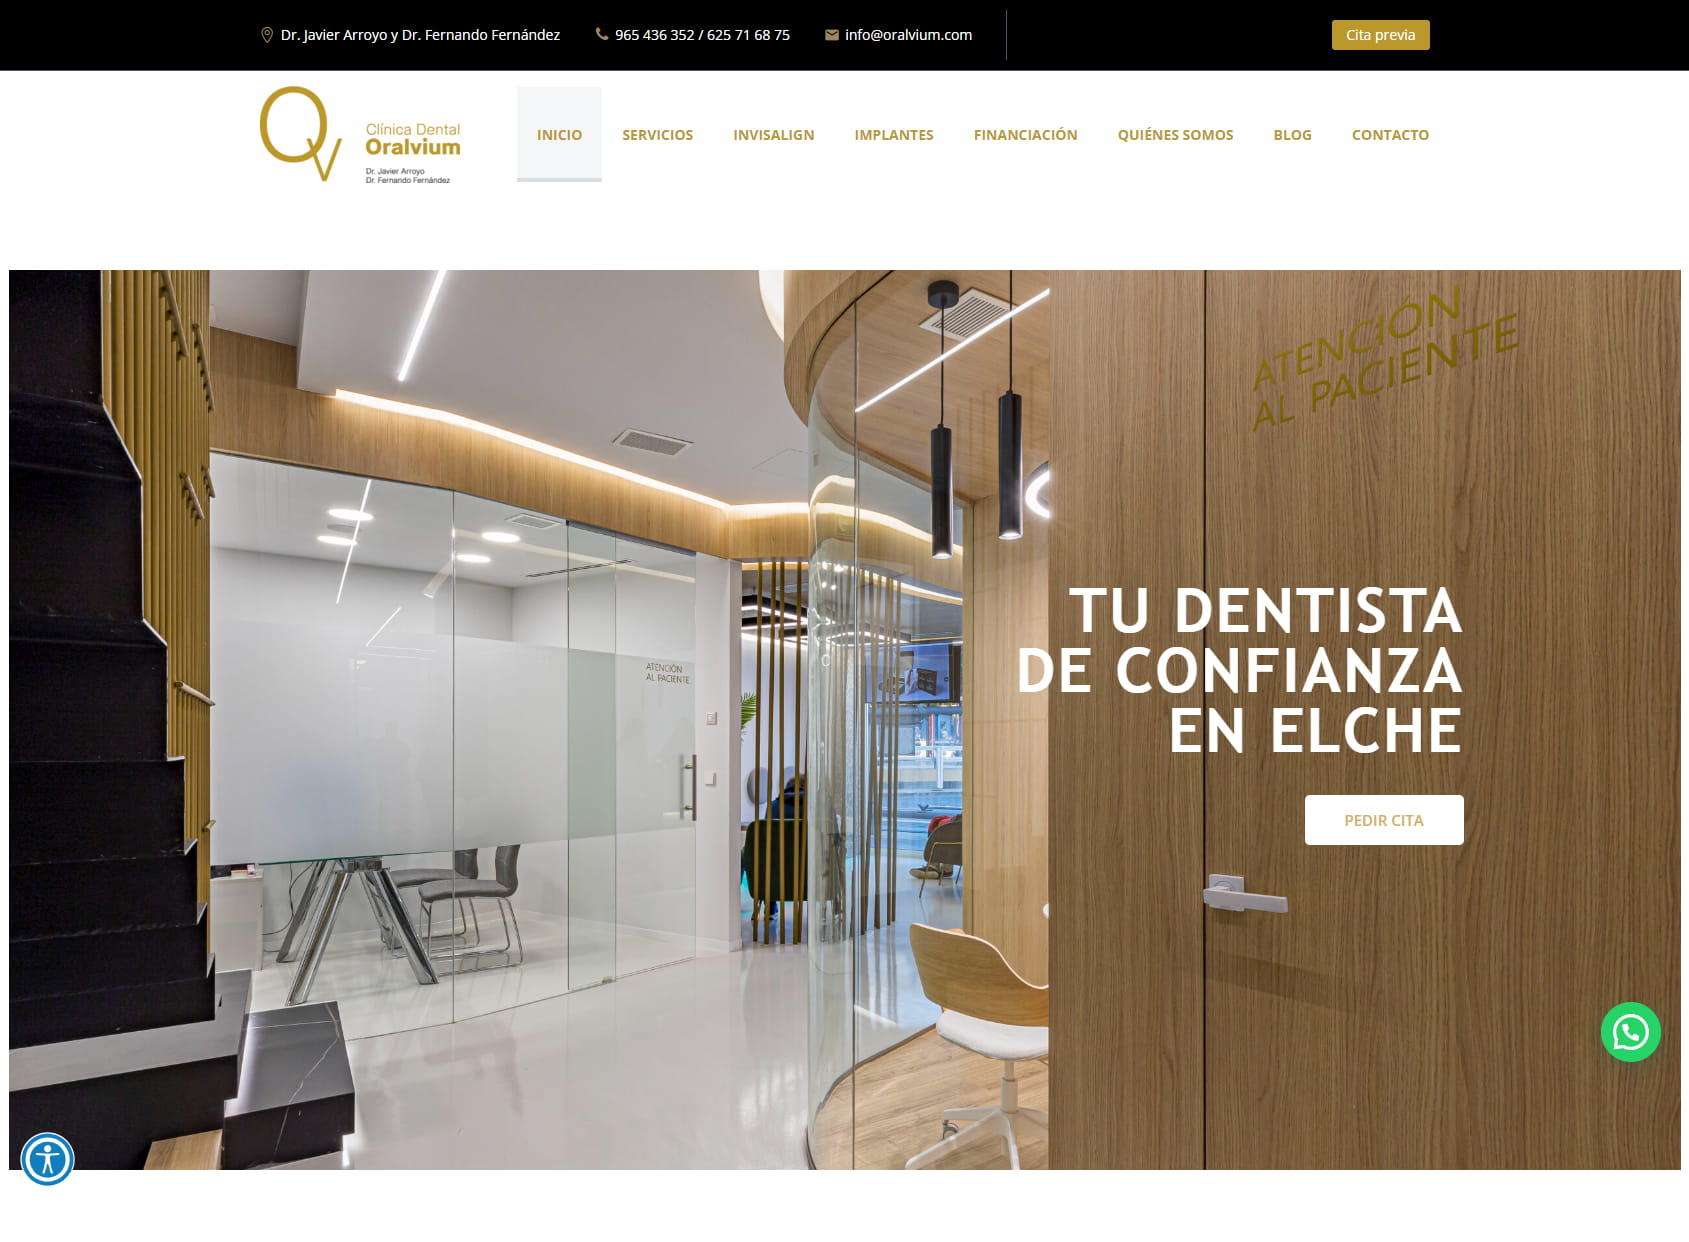 Clínica Dental Oralvium Drs. Javier Arroyo & Fernando Fernandez